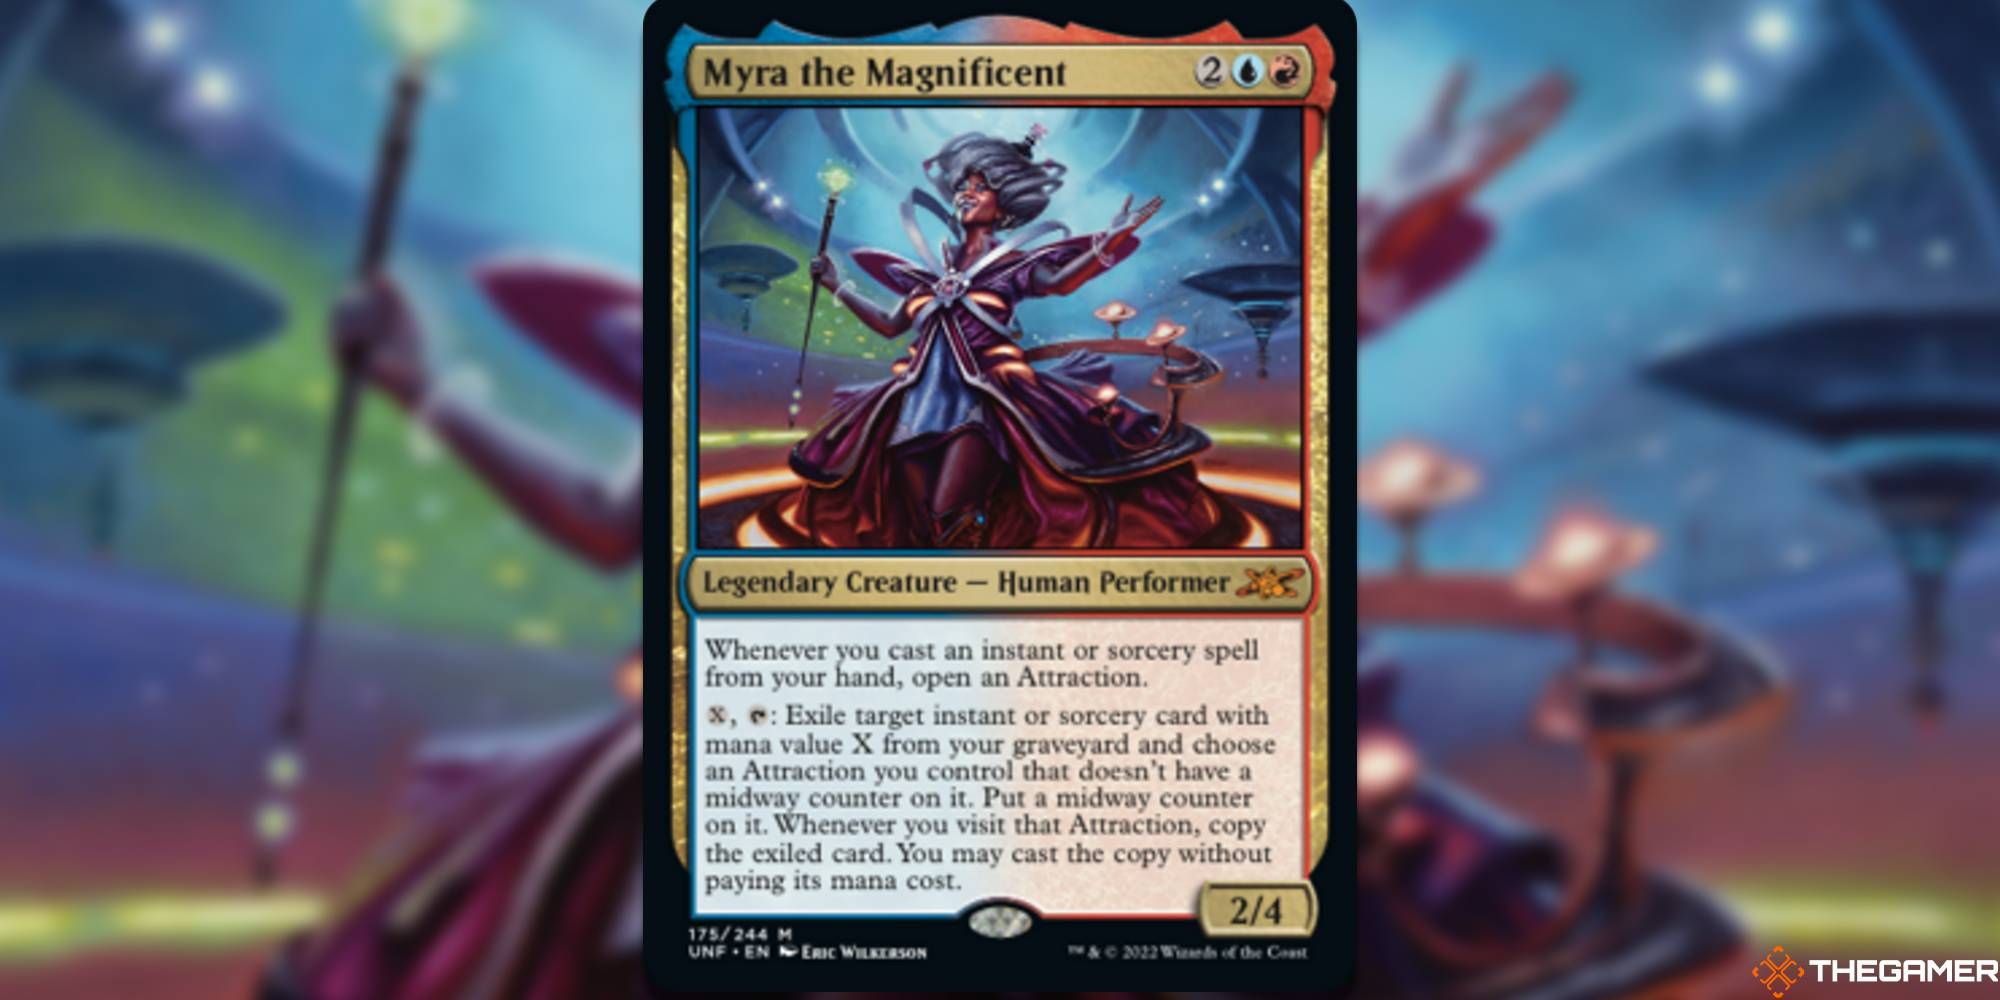 Myra the Magnificent